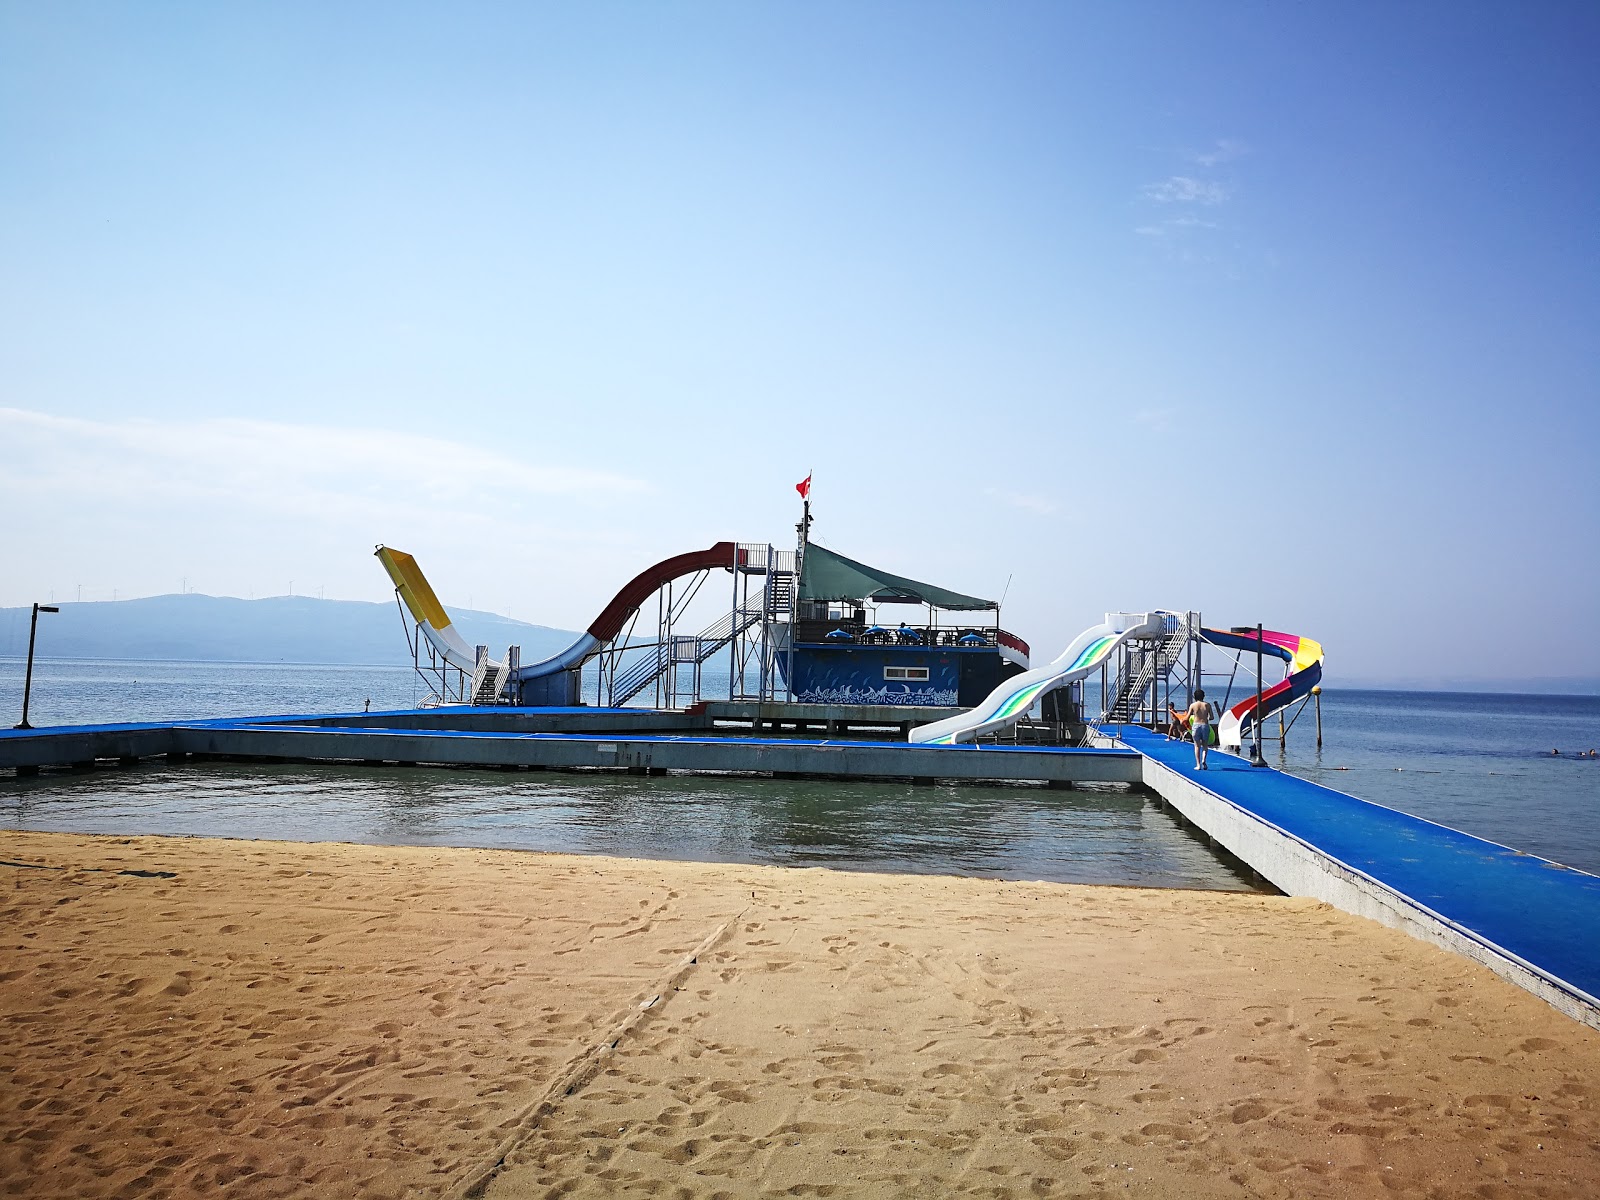 Foto af Erdek beach II - populært sted blandt afslapningskendere